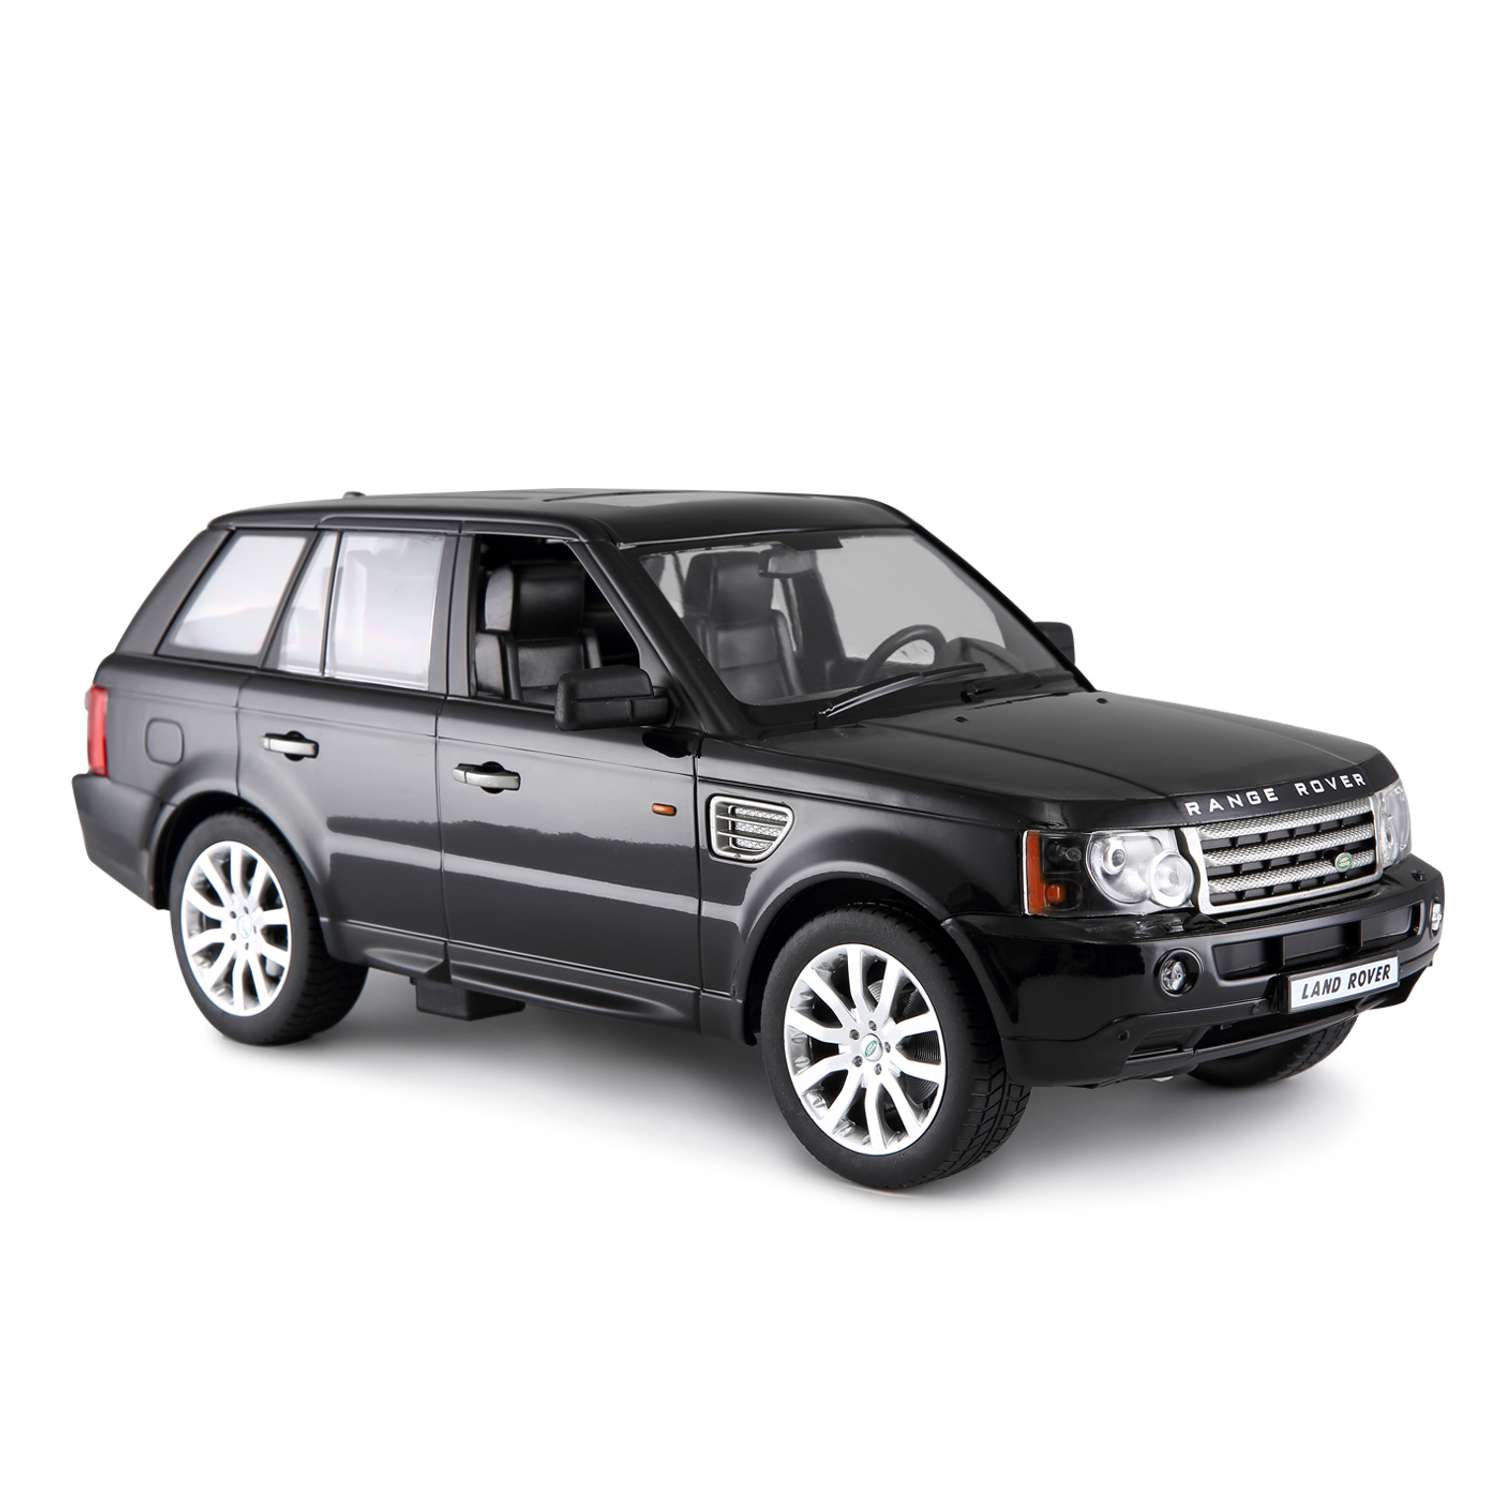 Машинка р/у Rastar Range Rover Sport 1:14 черная - фото 2